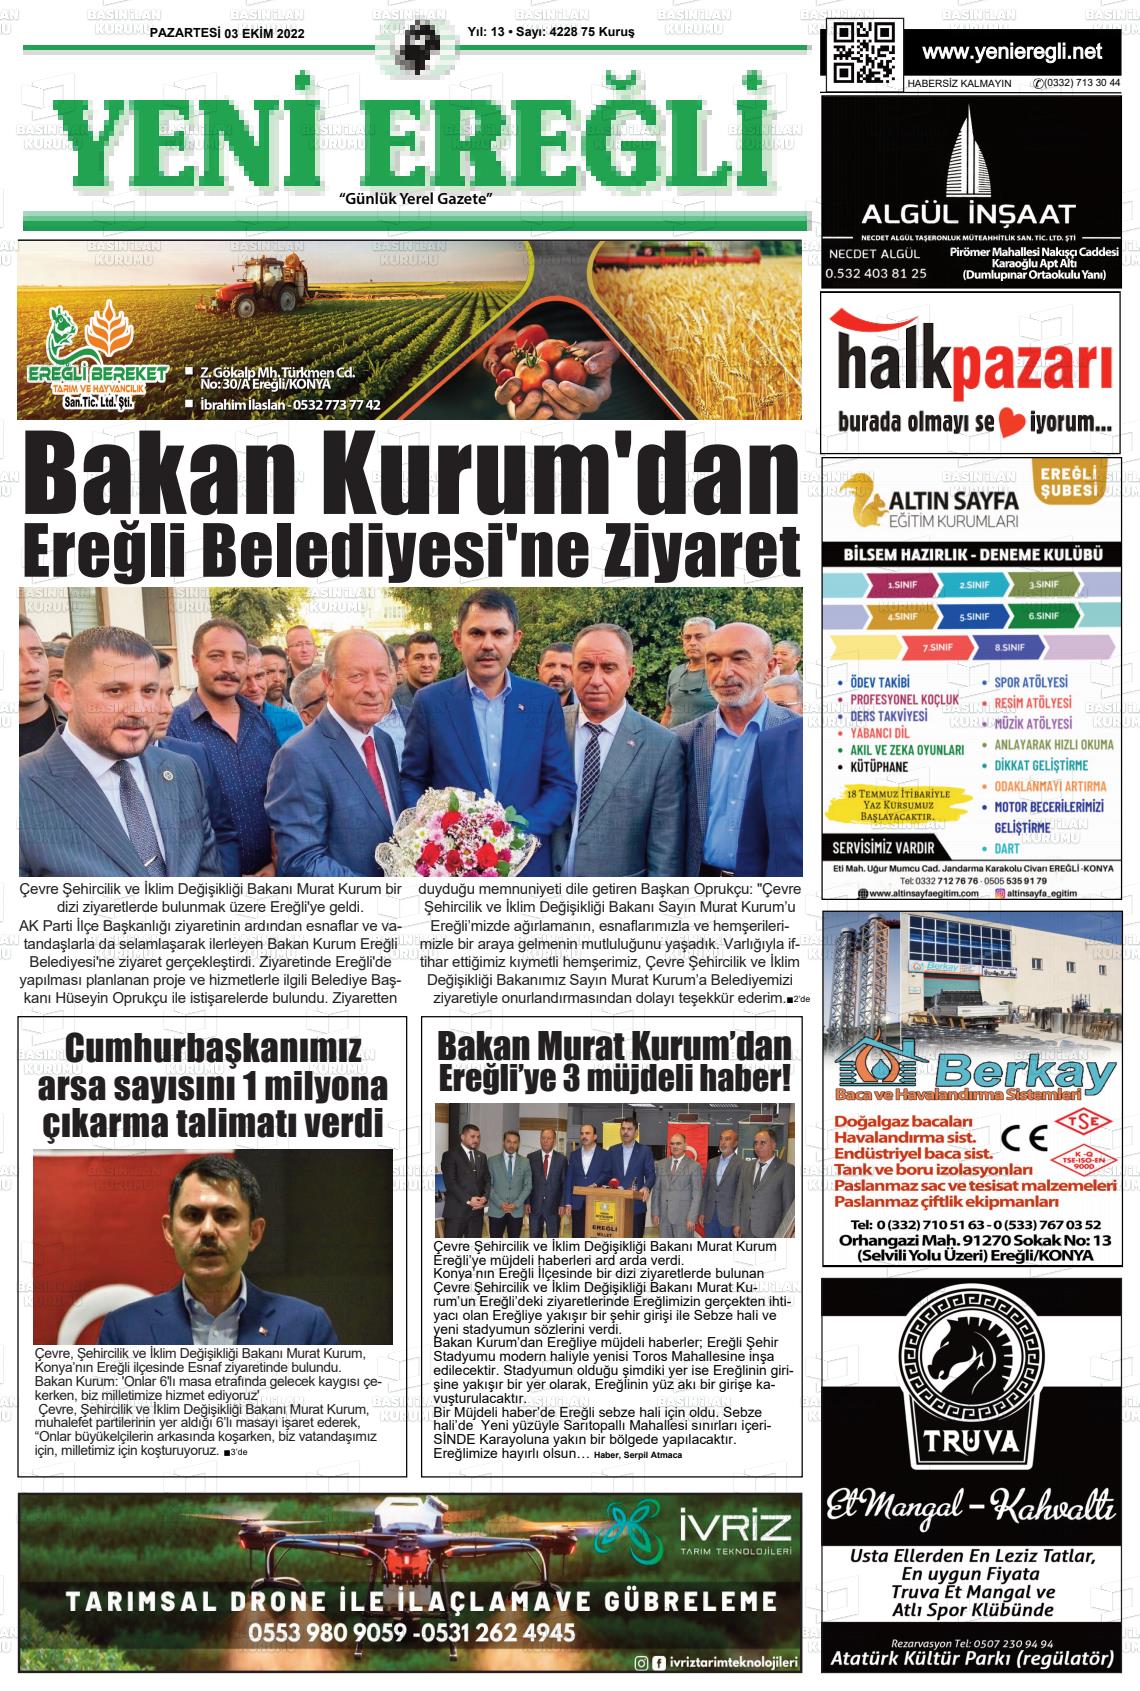 03 Ekim 2022 Yeni Ereğli Gazete Manşeti